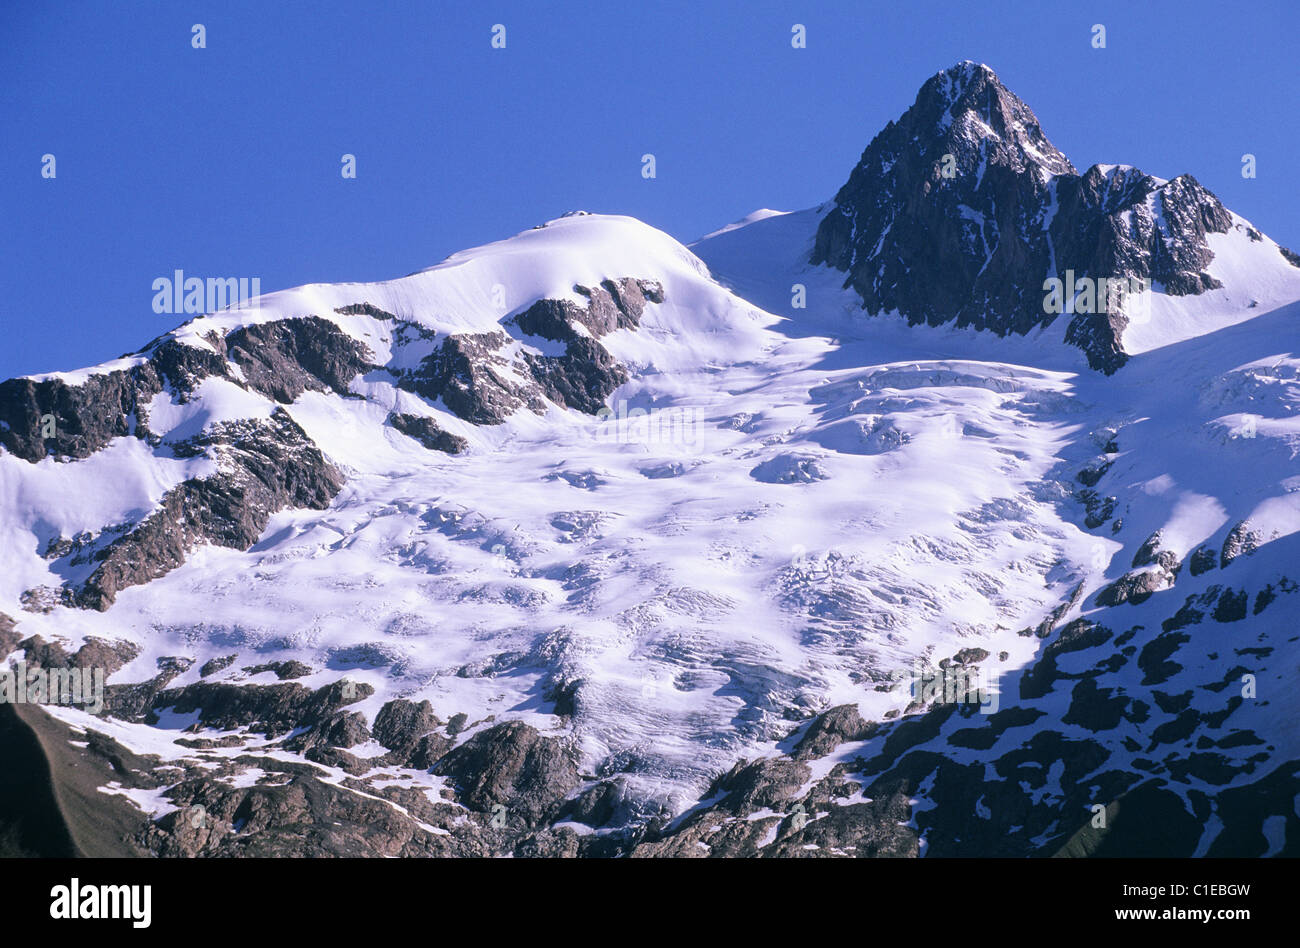 France, Savoie, Aiguille and Glacier des Glaciers in the Mont Blanc massif  seen from the village of La Ville des Glaciers Stock Photo - Alamy